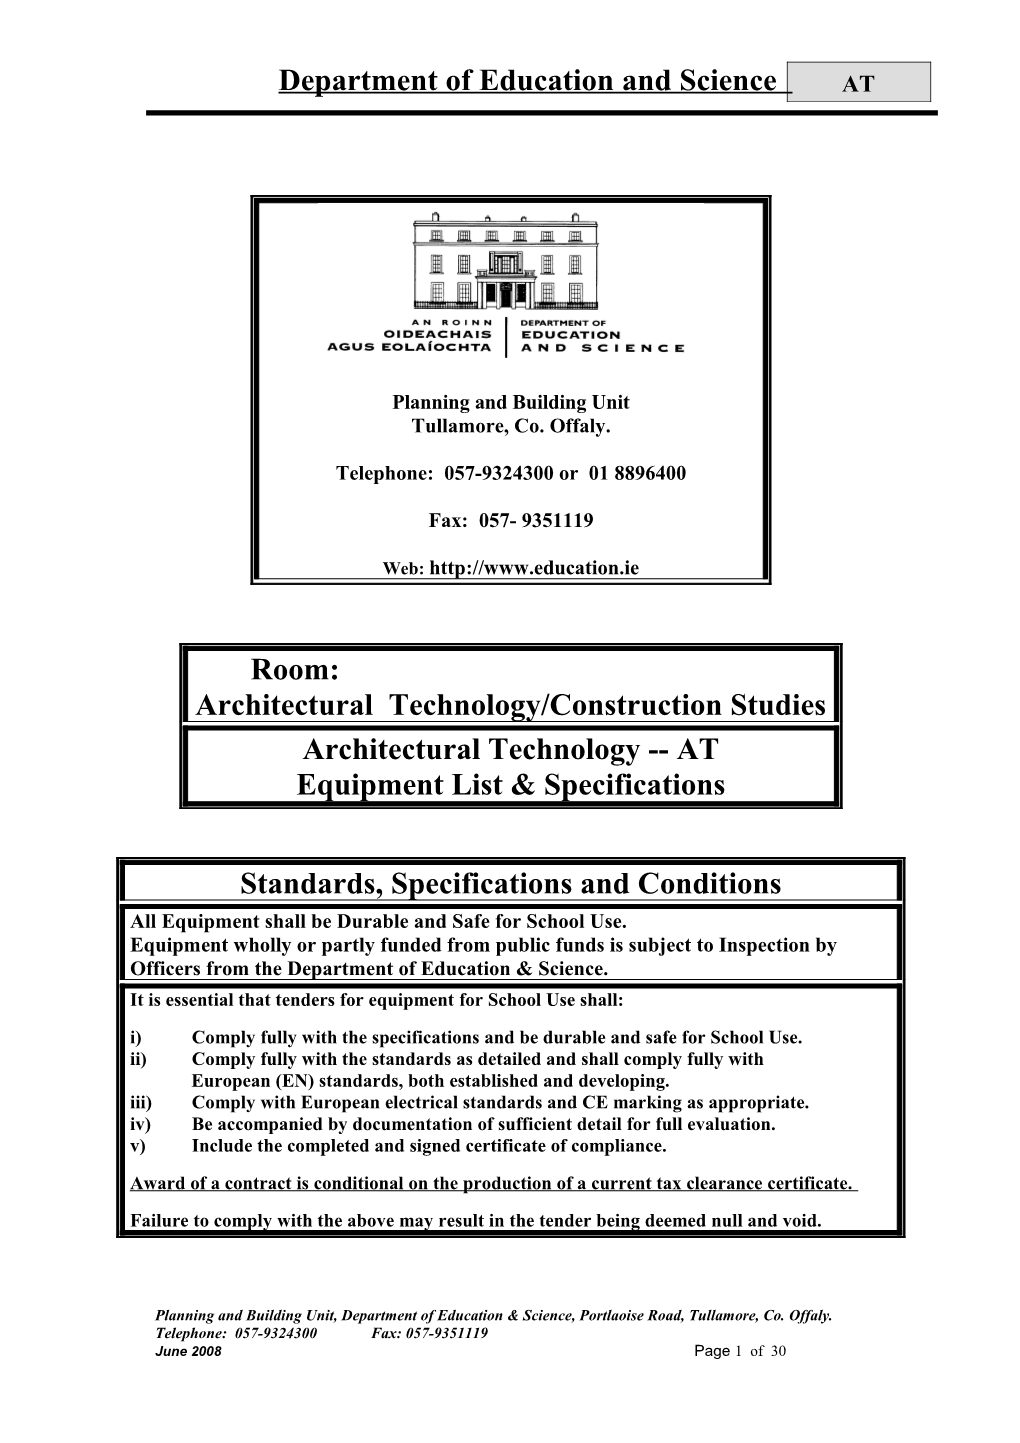 Architectural Technology/Construction Studies